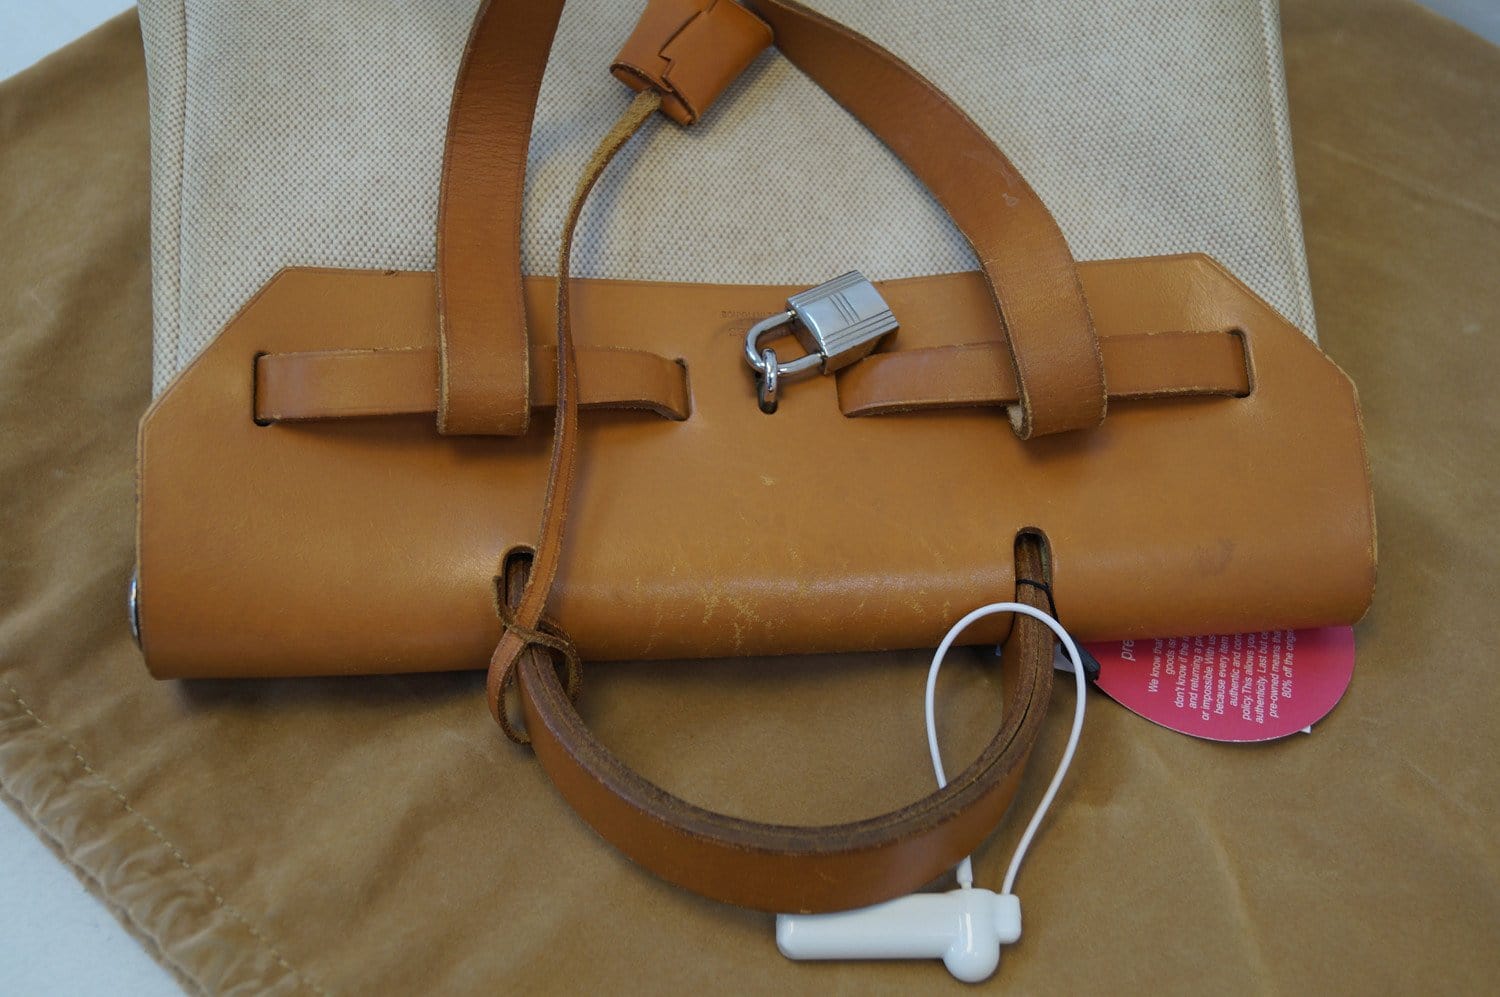 Hermes Herbag PM 2 in 1 Canvas Dark Brown Leather Shoulder Bag